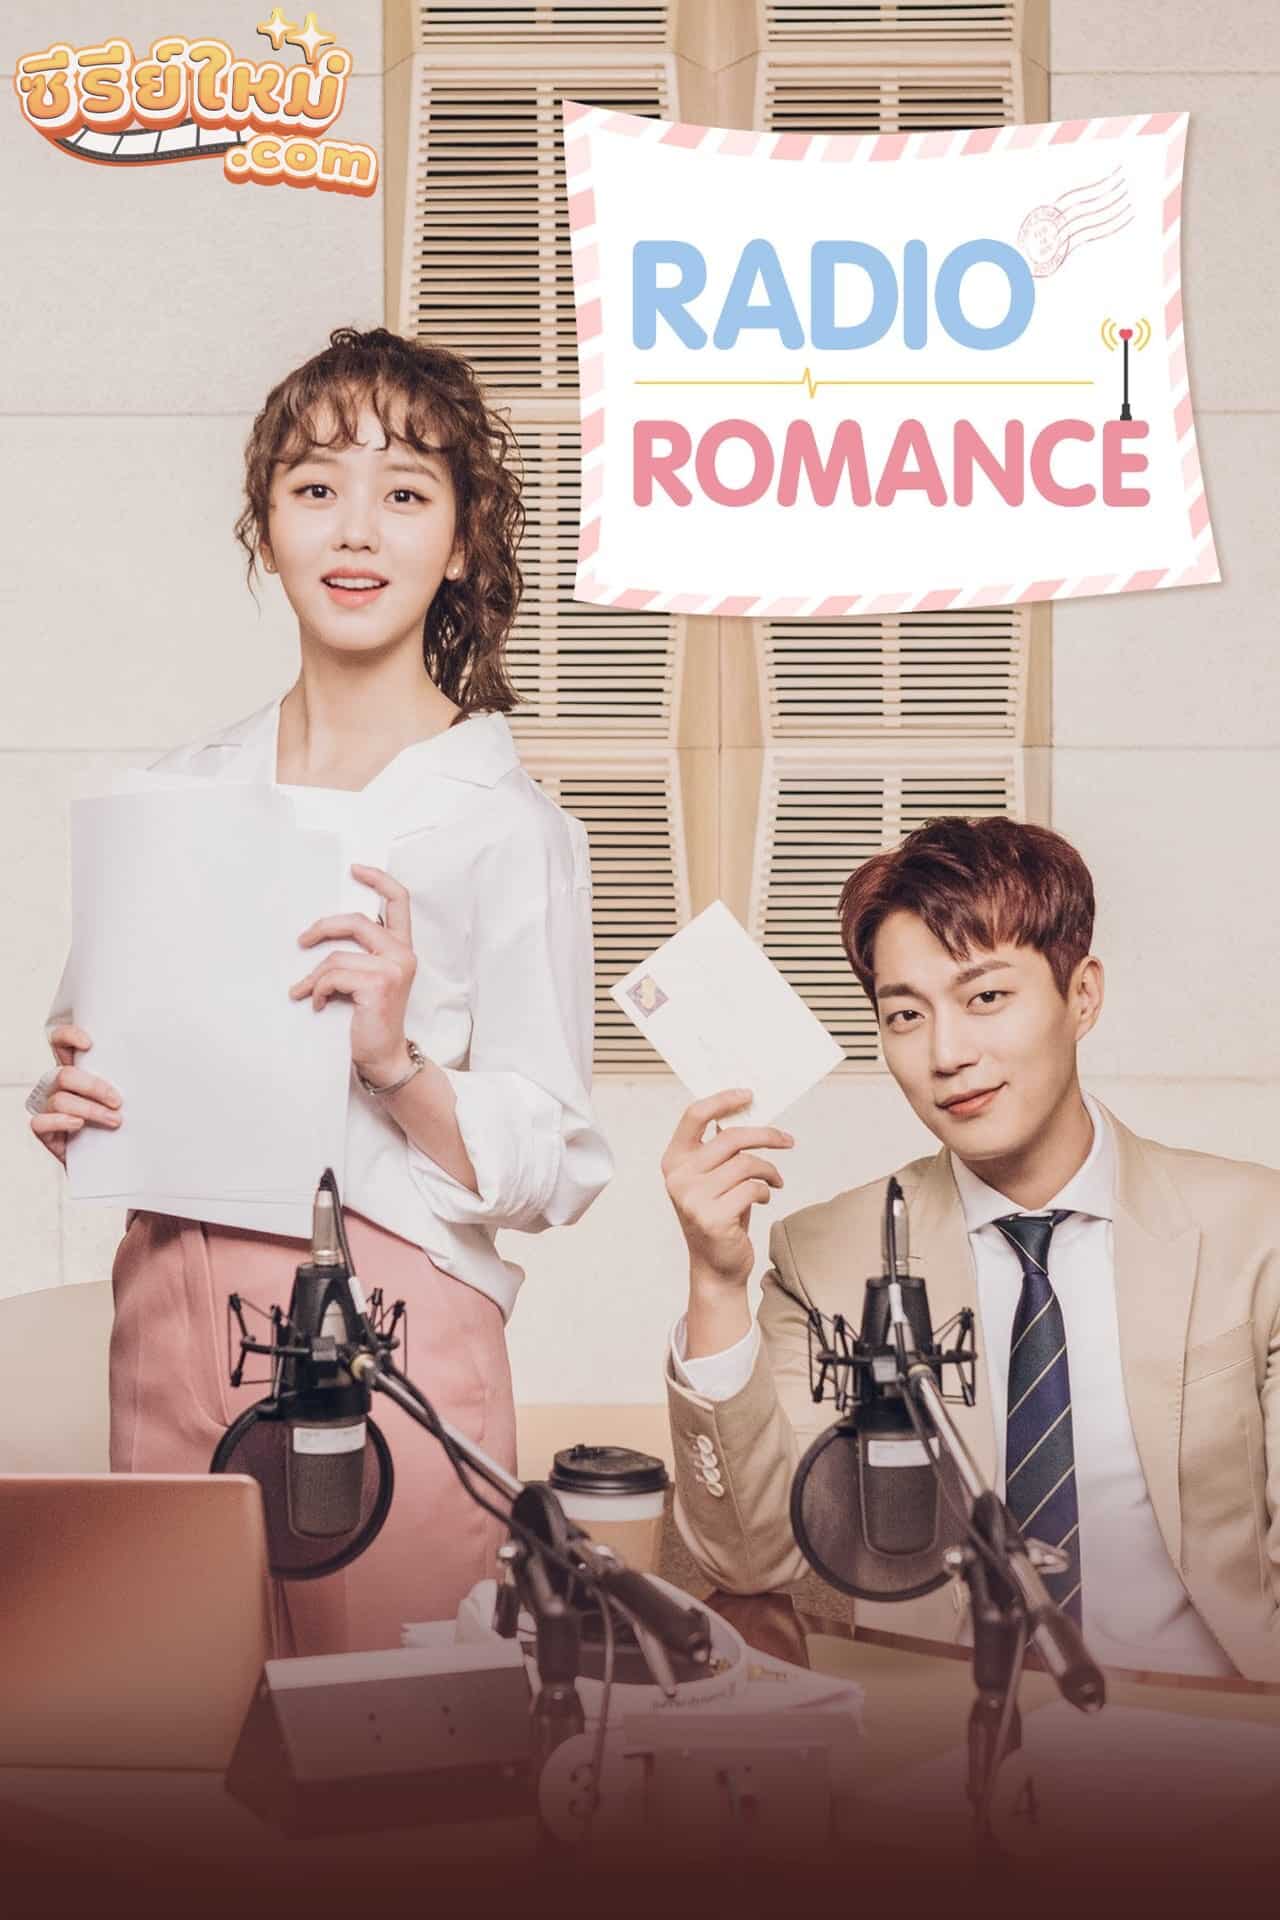 Radio Romance ตื้อหัวใจนายจอมหยิ่ง (2018)